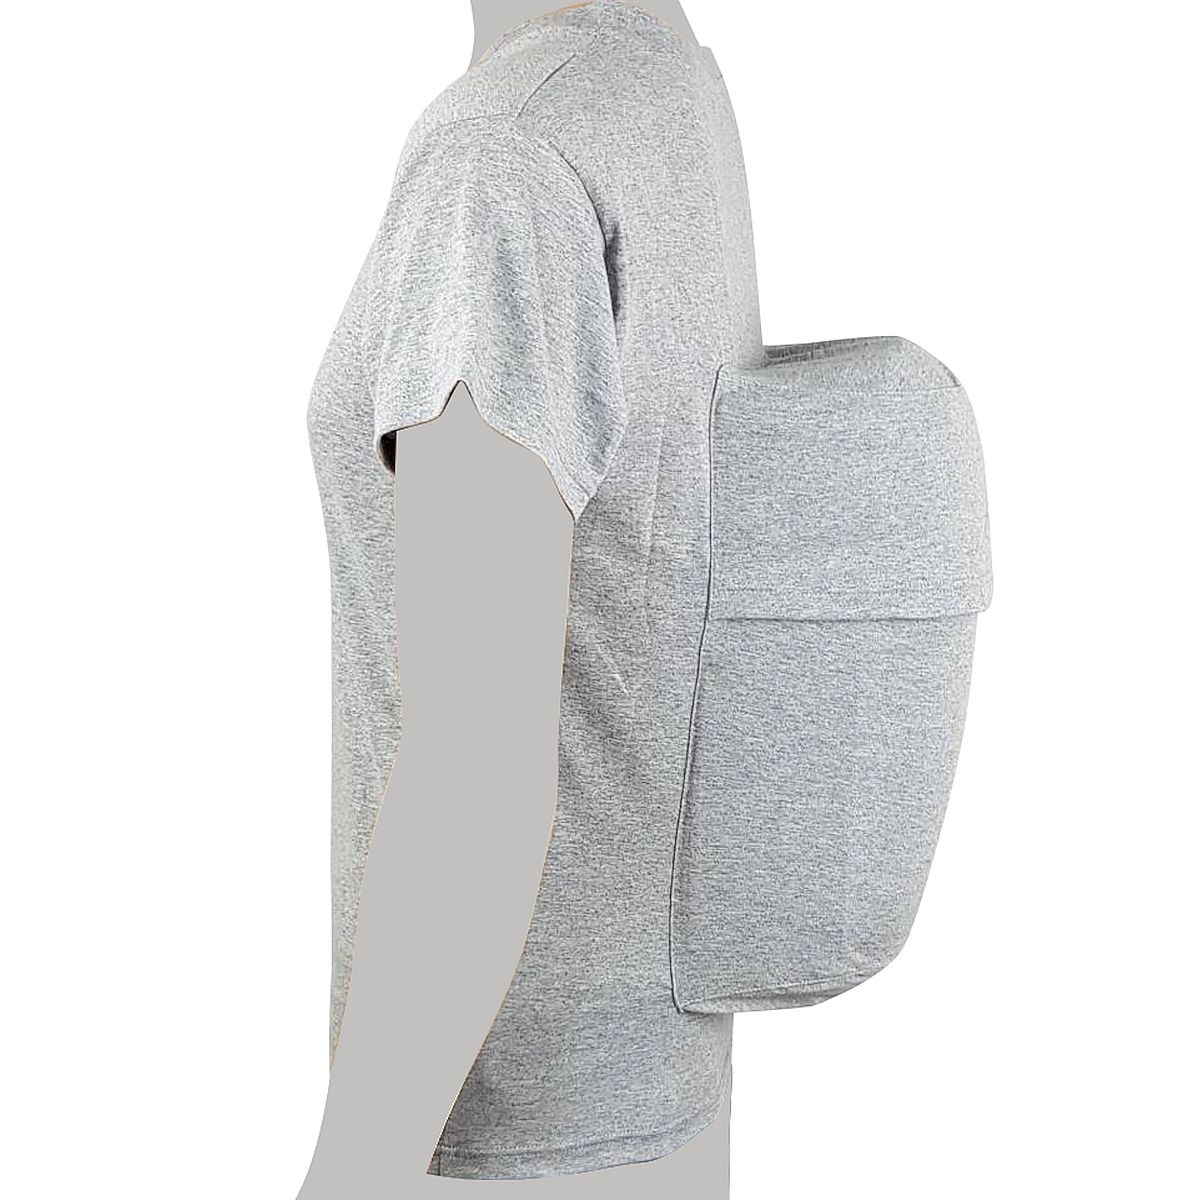 RVS-Shirt WK 3 mit innovativer Rückeneinsatz-Kombination